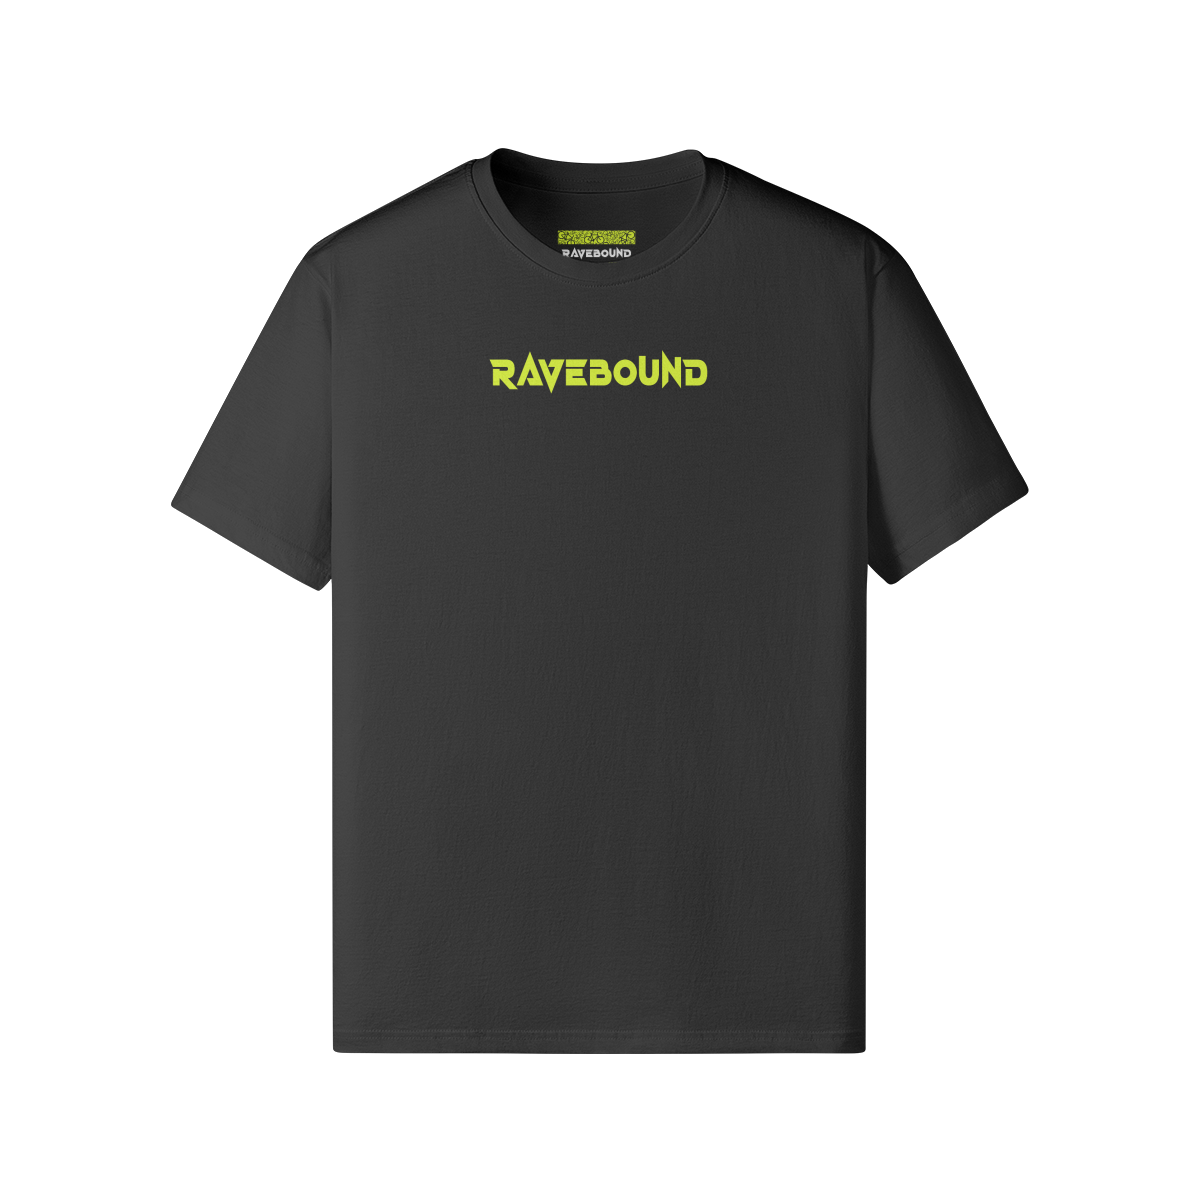 RAVEBOUND (BACK PRINT) - Unisex Lightweight Classic T-shirt